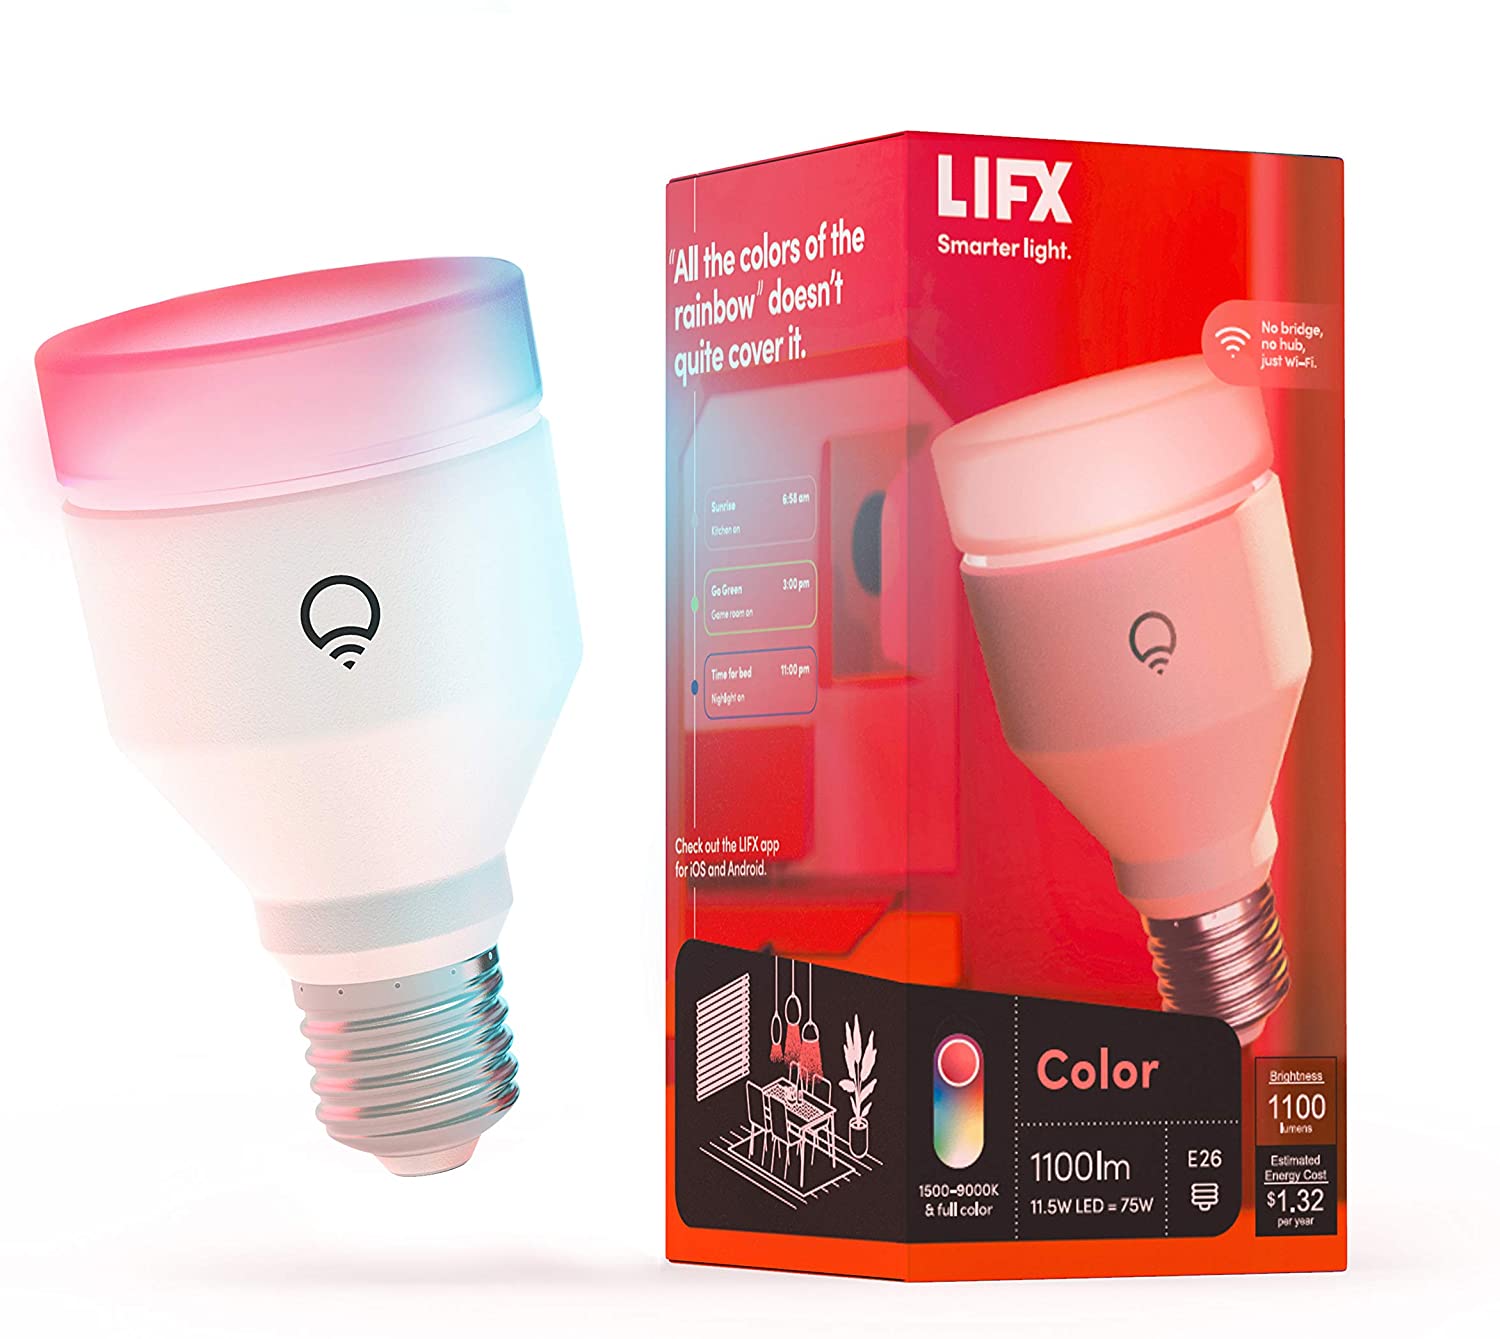 Lifx Color bulb